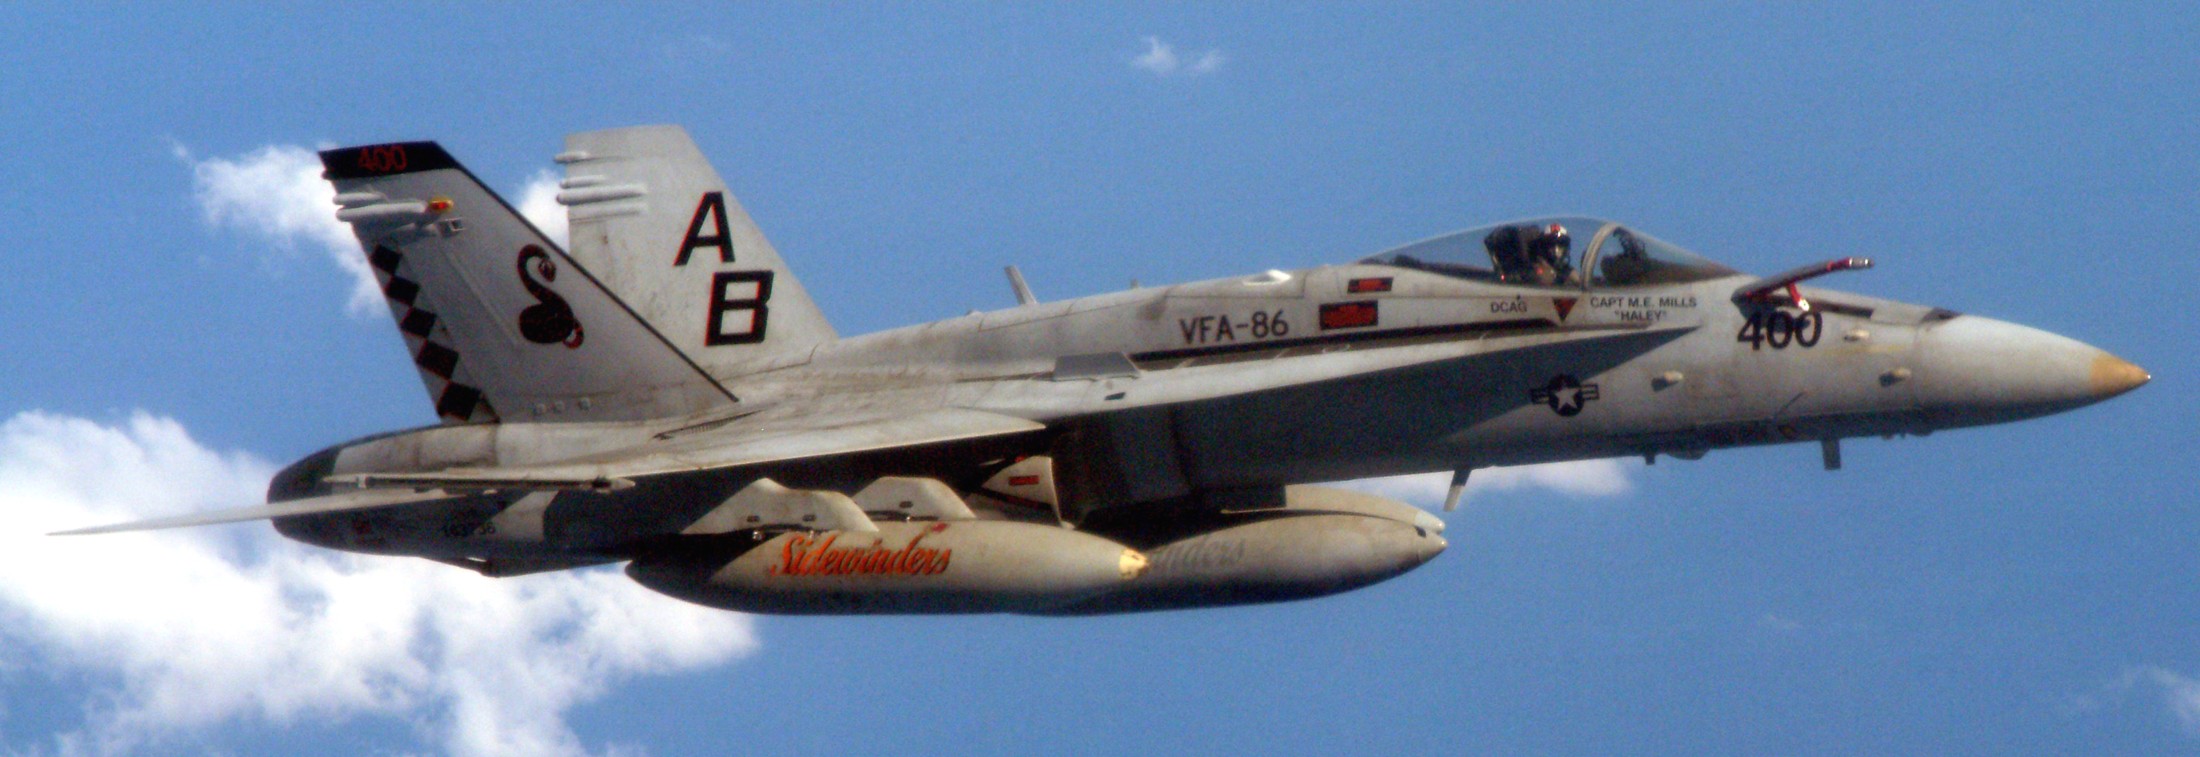 vfa-86 sidewinders strike fighter squadron f/a-18c hornet cvw-1 uss enterprise cvn-65 navy 109p